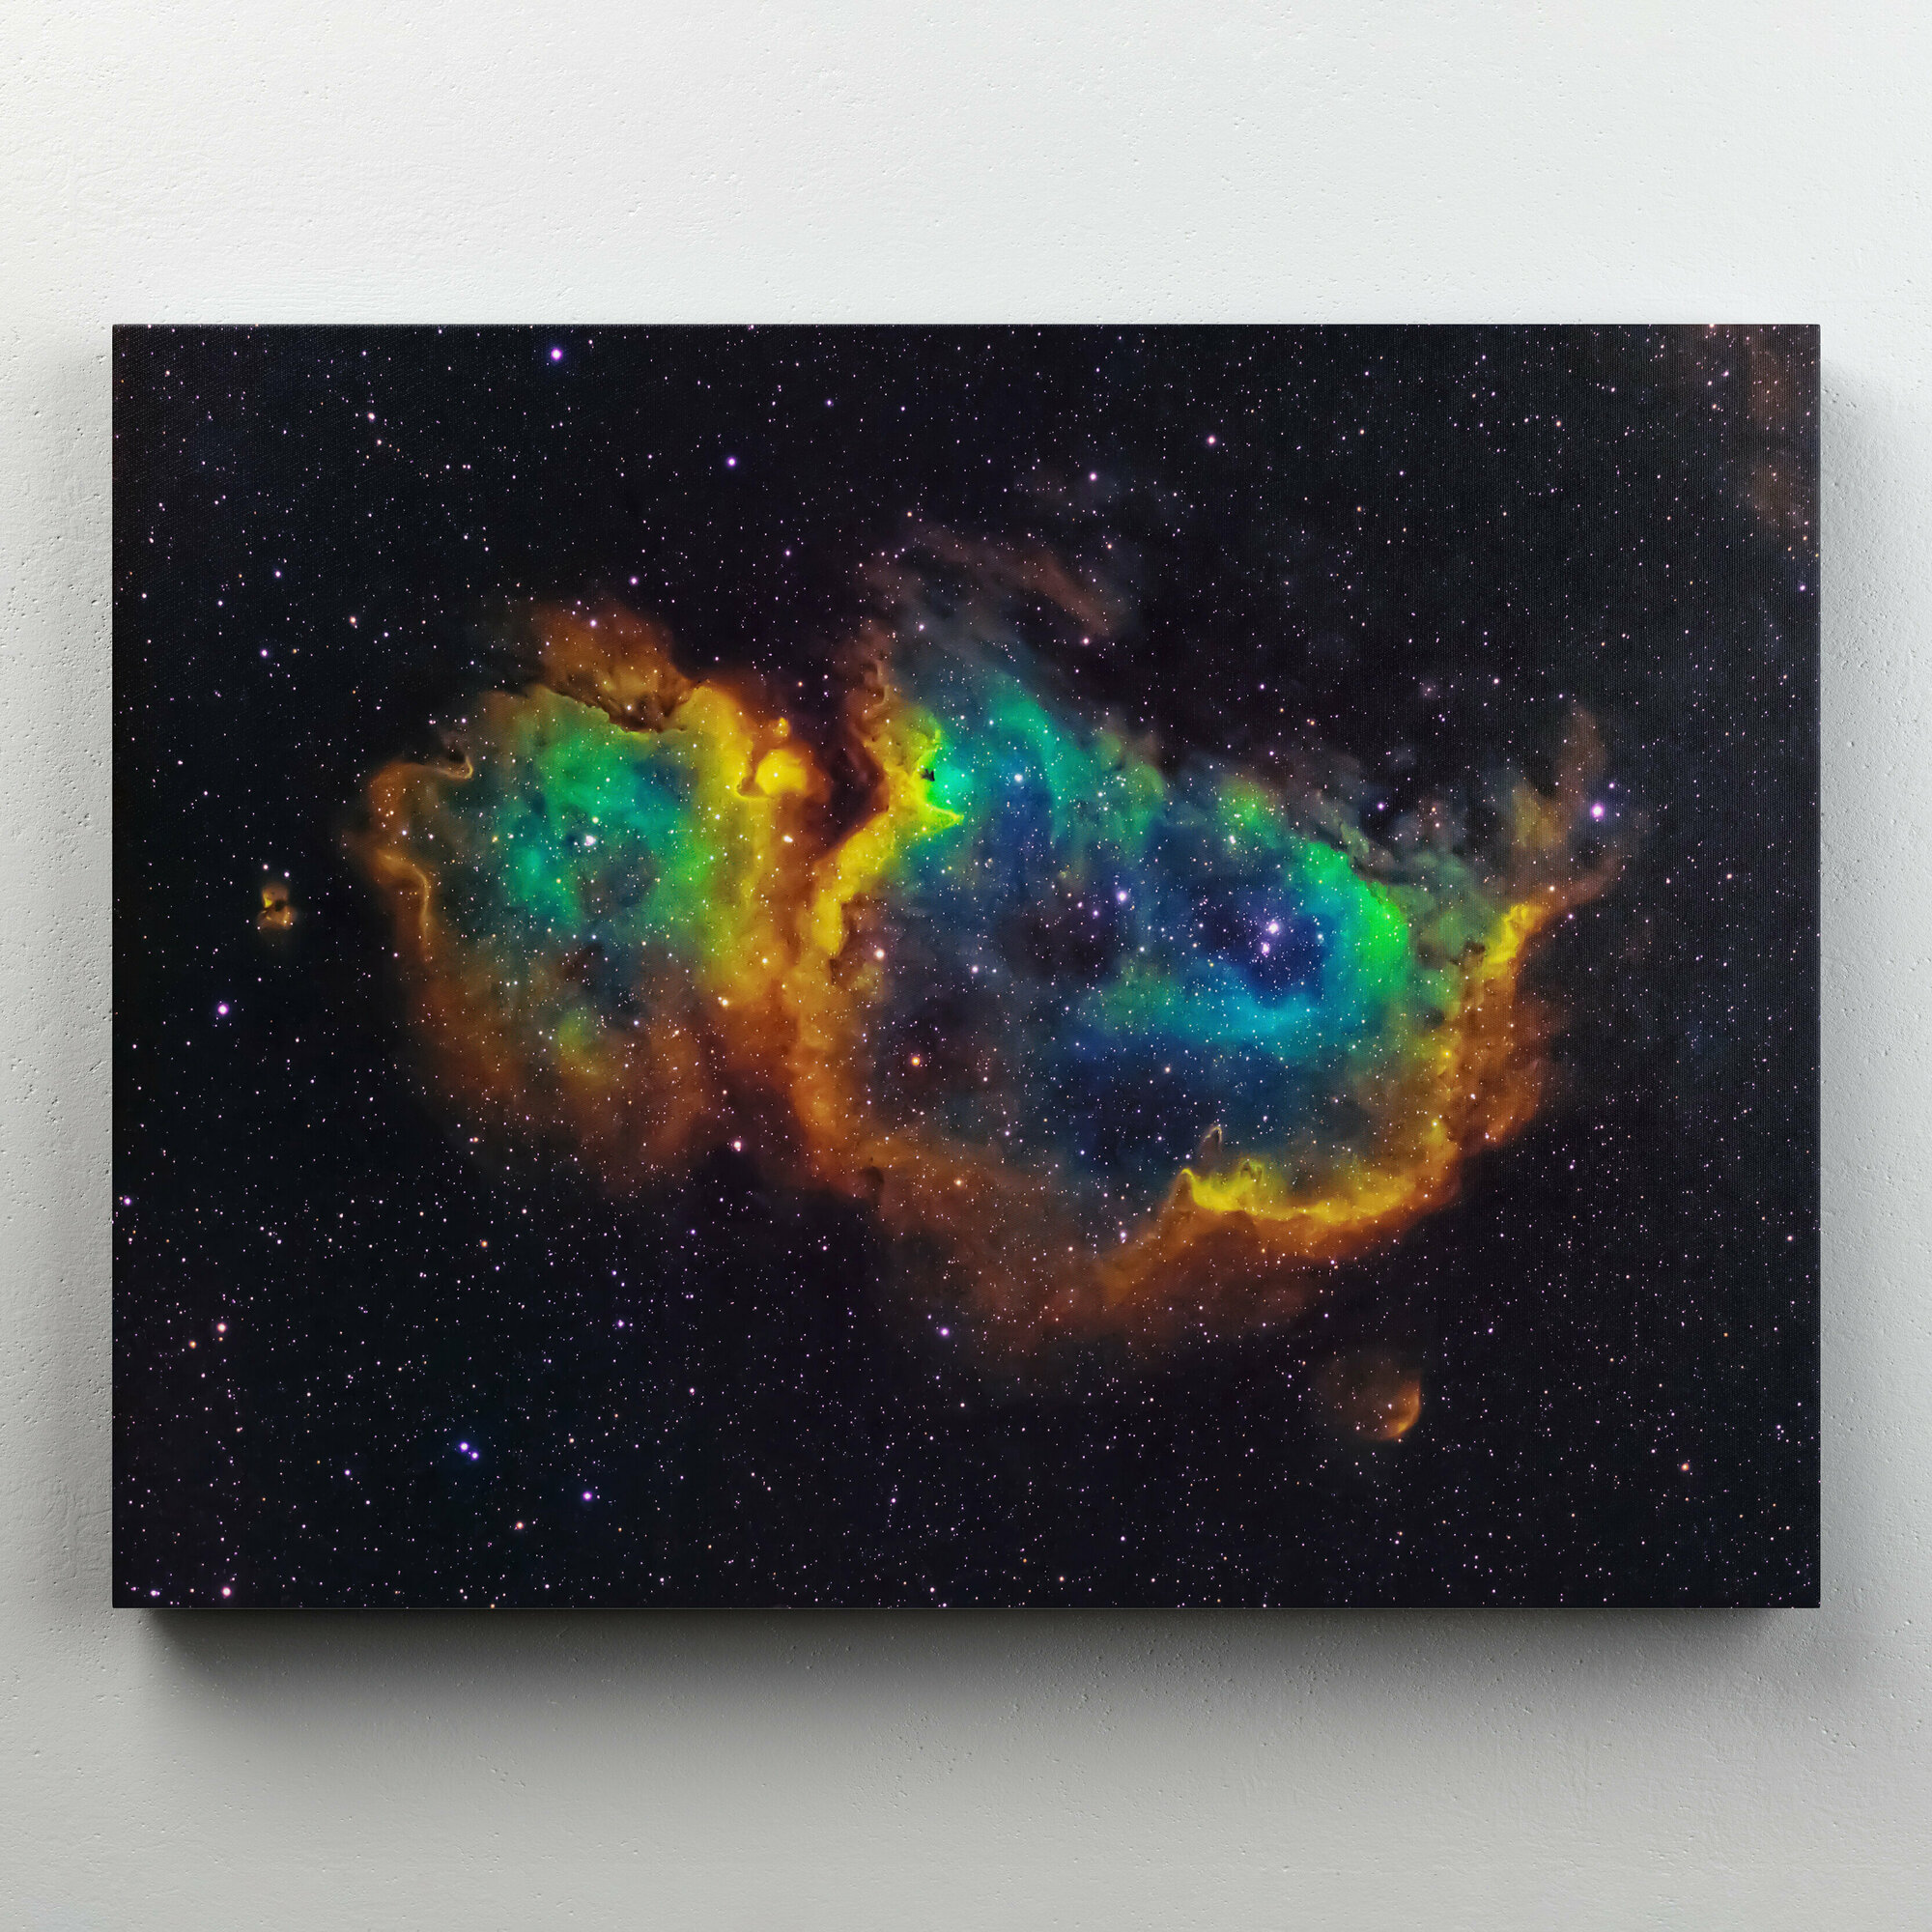 Интерьерная картина на холсте "Галактика" размер 30x22 см